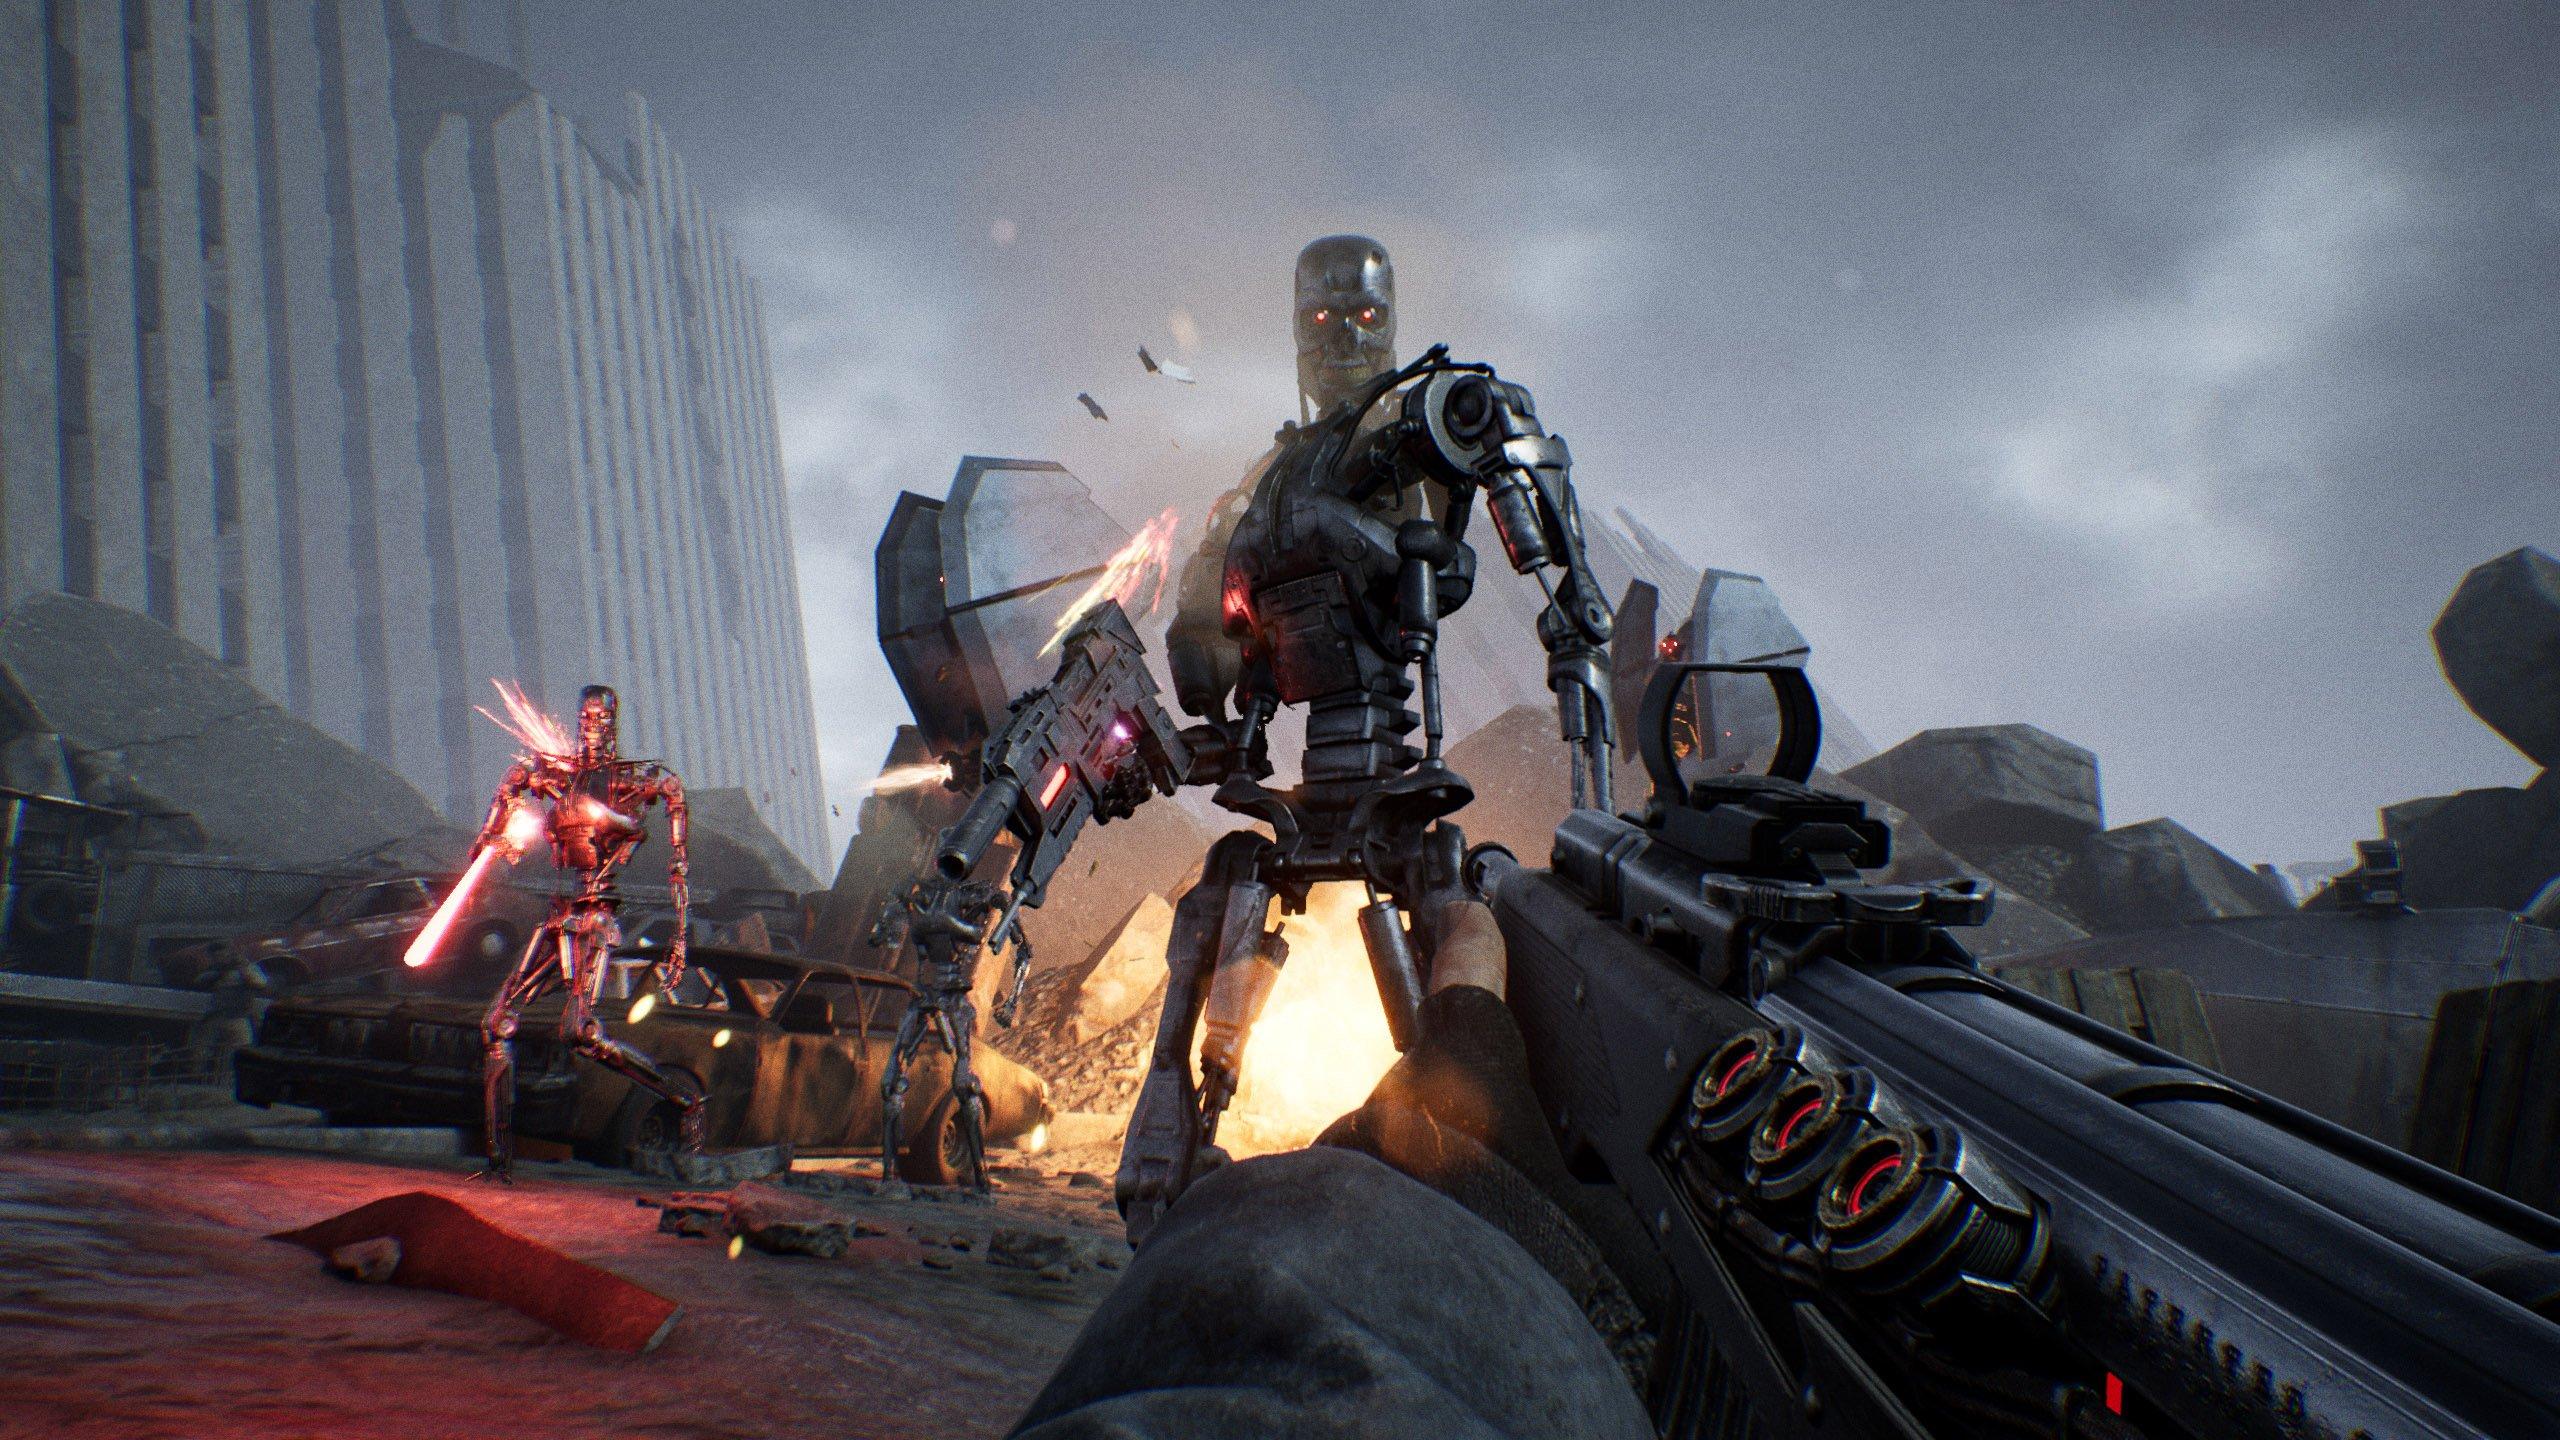 Terminator: Resistance - Xbox One